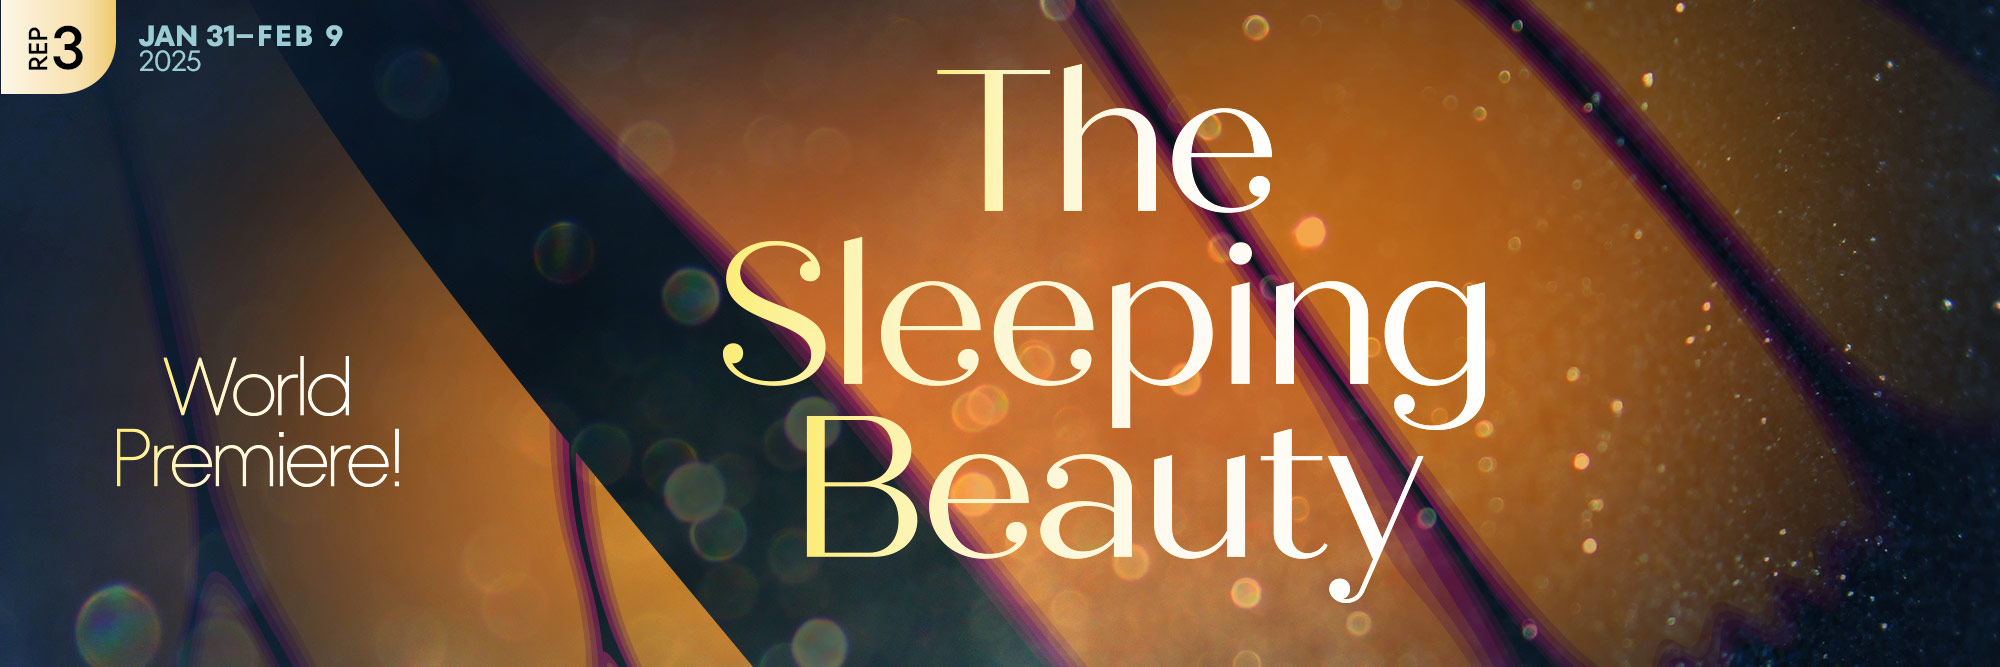 Rep 3: The Sleeping Beauty World Premiere: January 31 - February 9, 2025